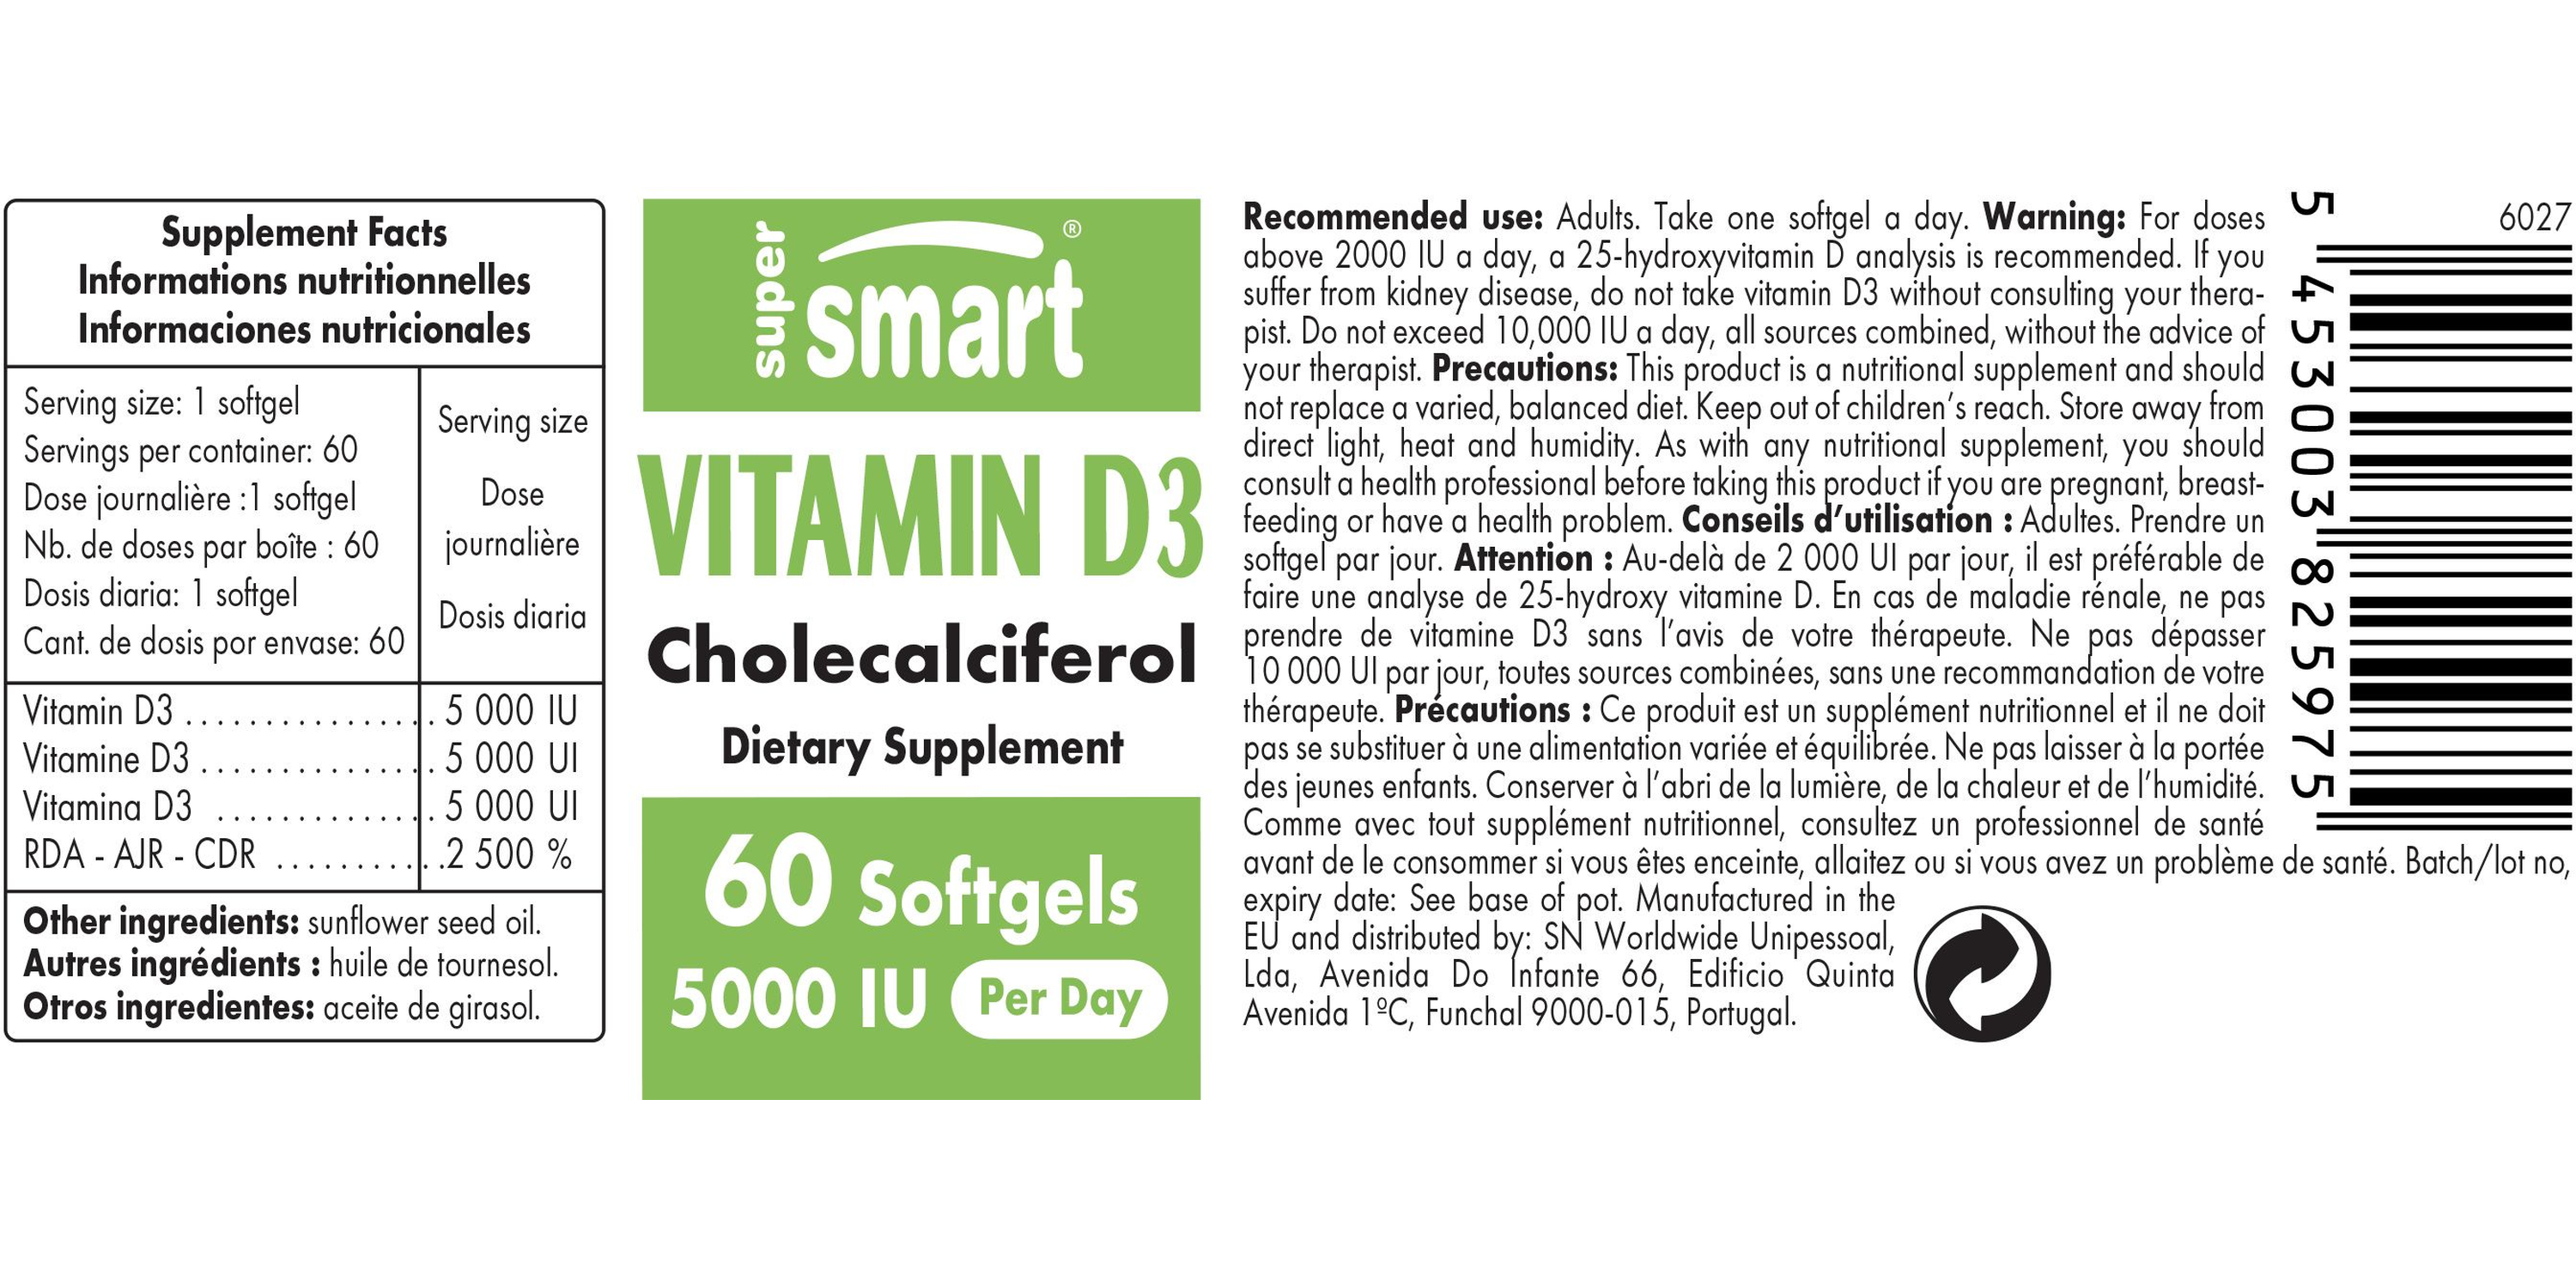 Vitamin D3 Supplement 